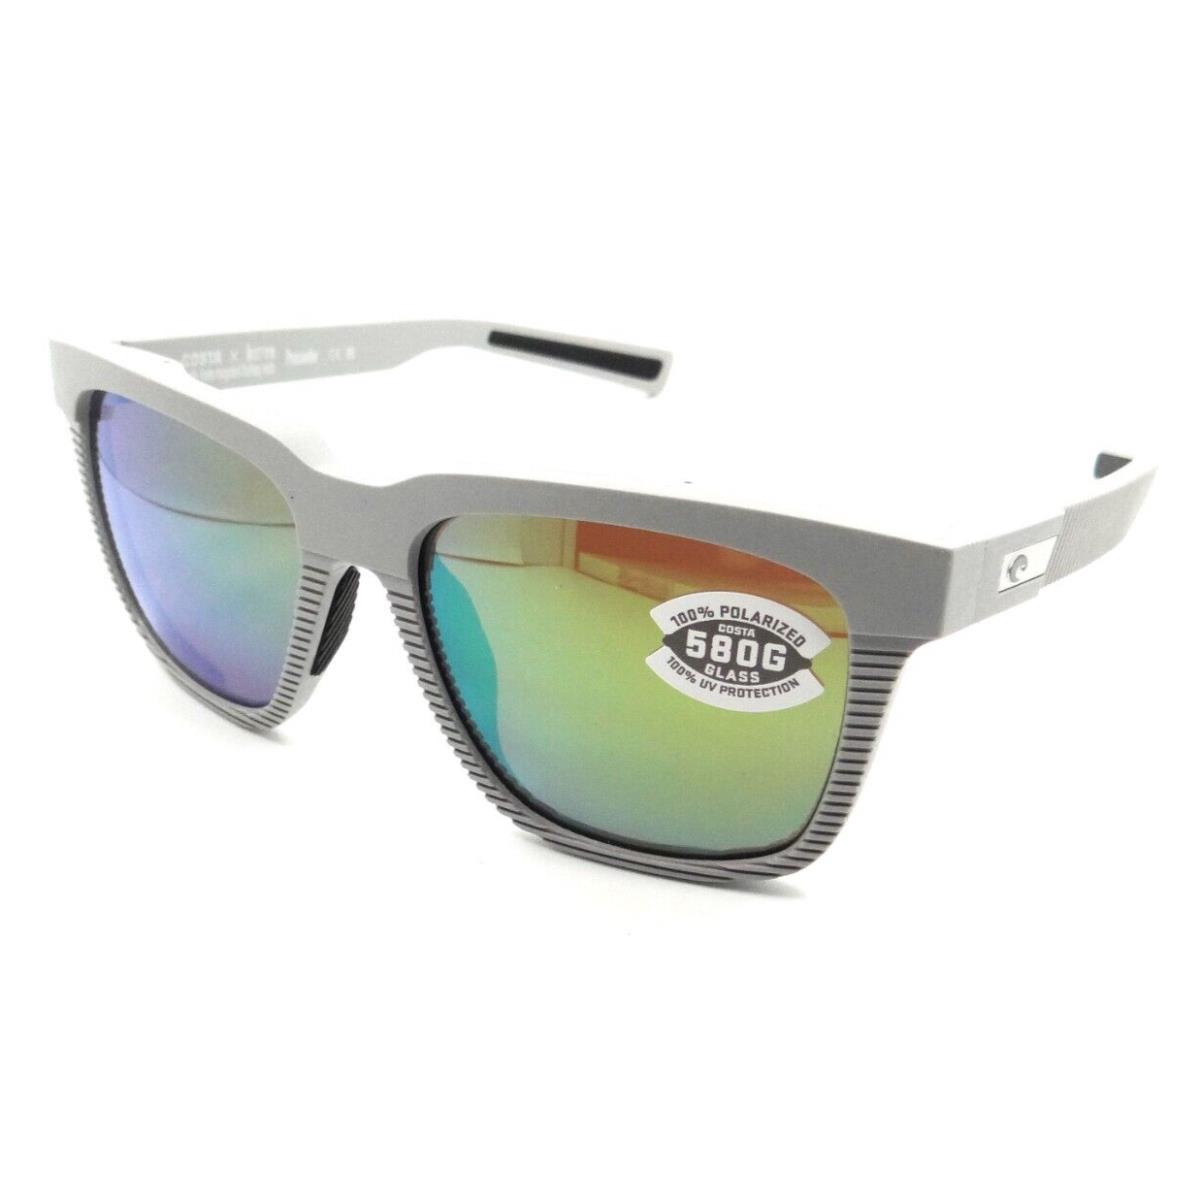 Costa Del Mar Sunglasses Pescador Net Light Gray / Copper Green Mirror 580G